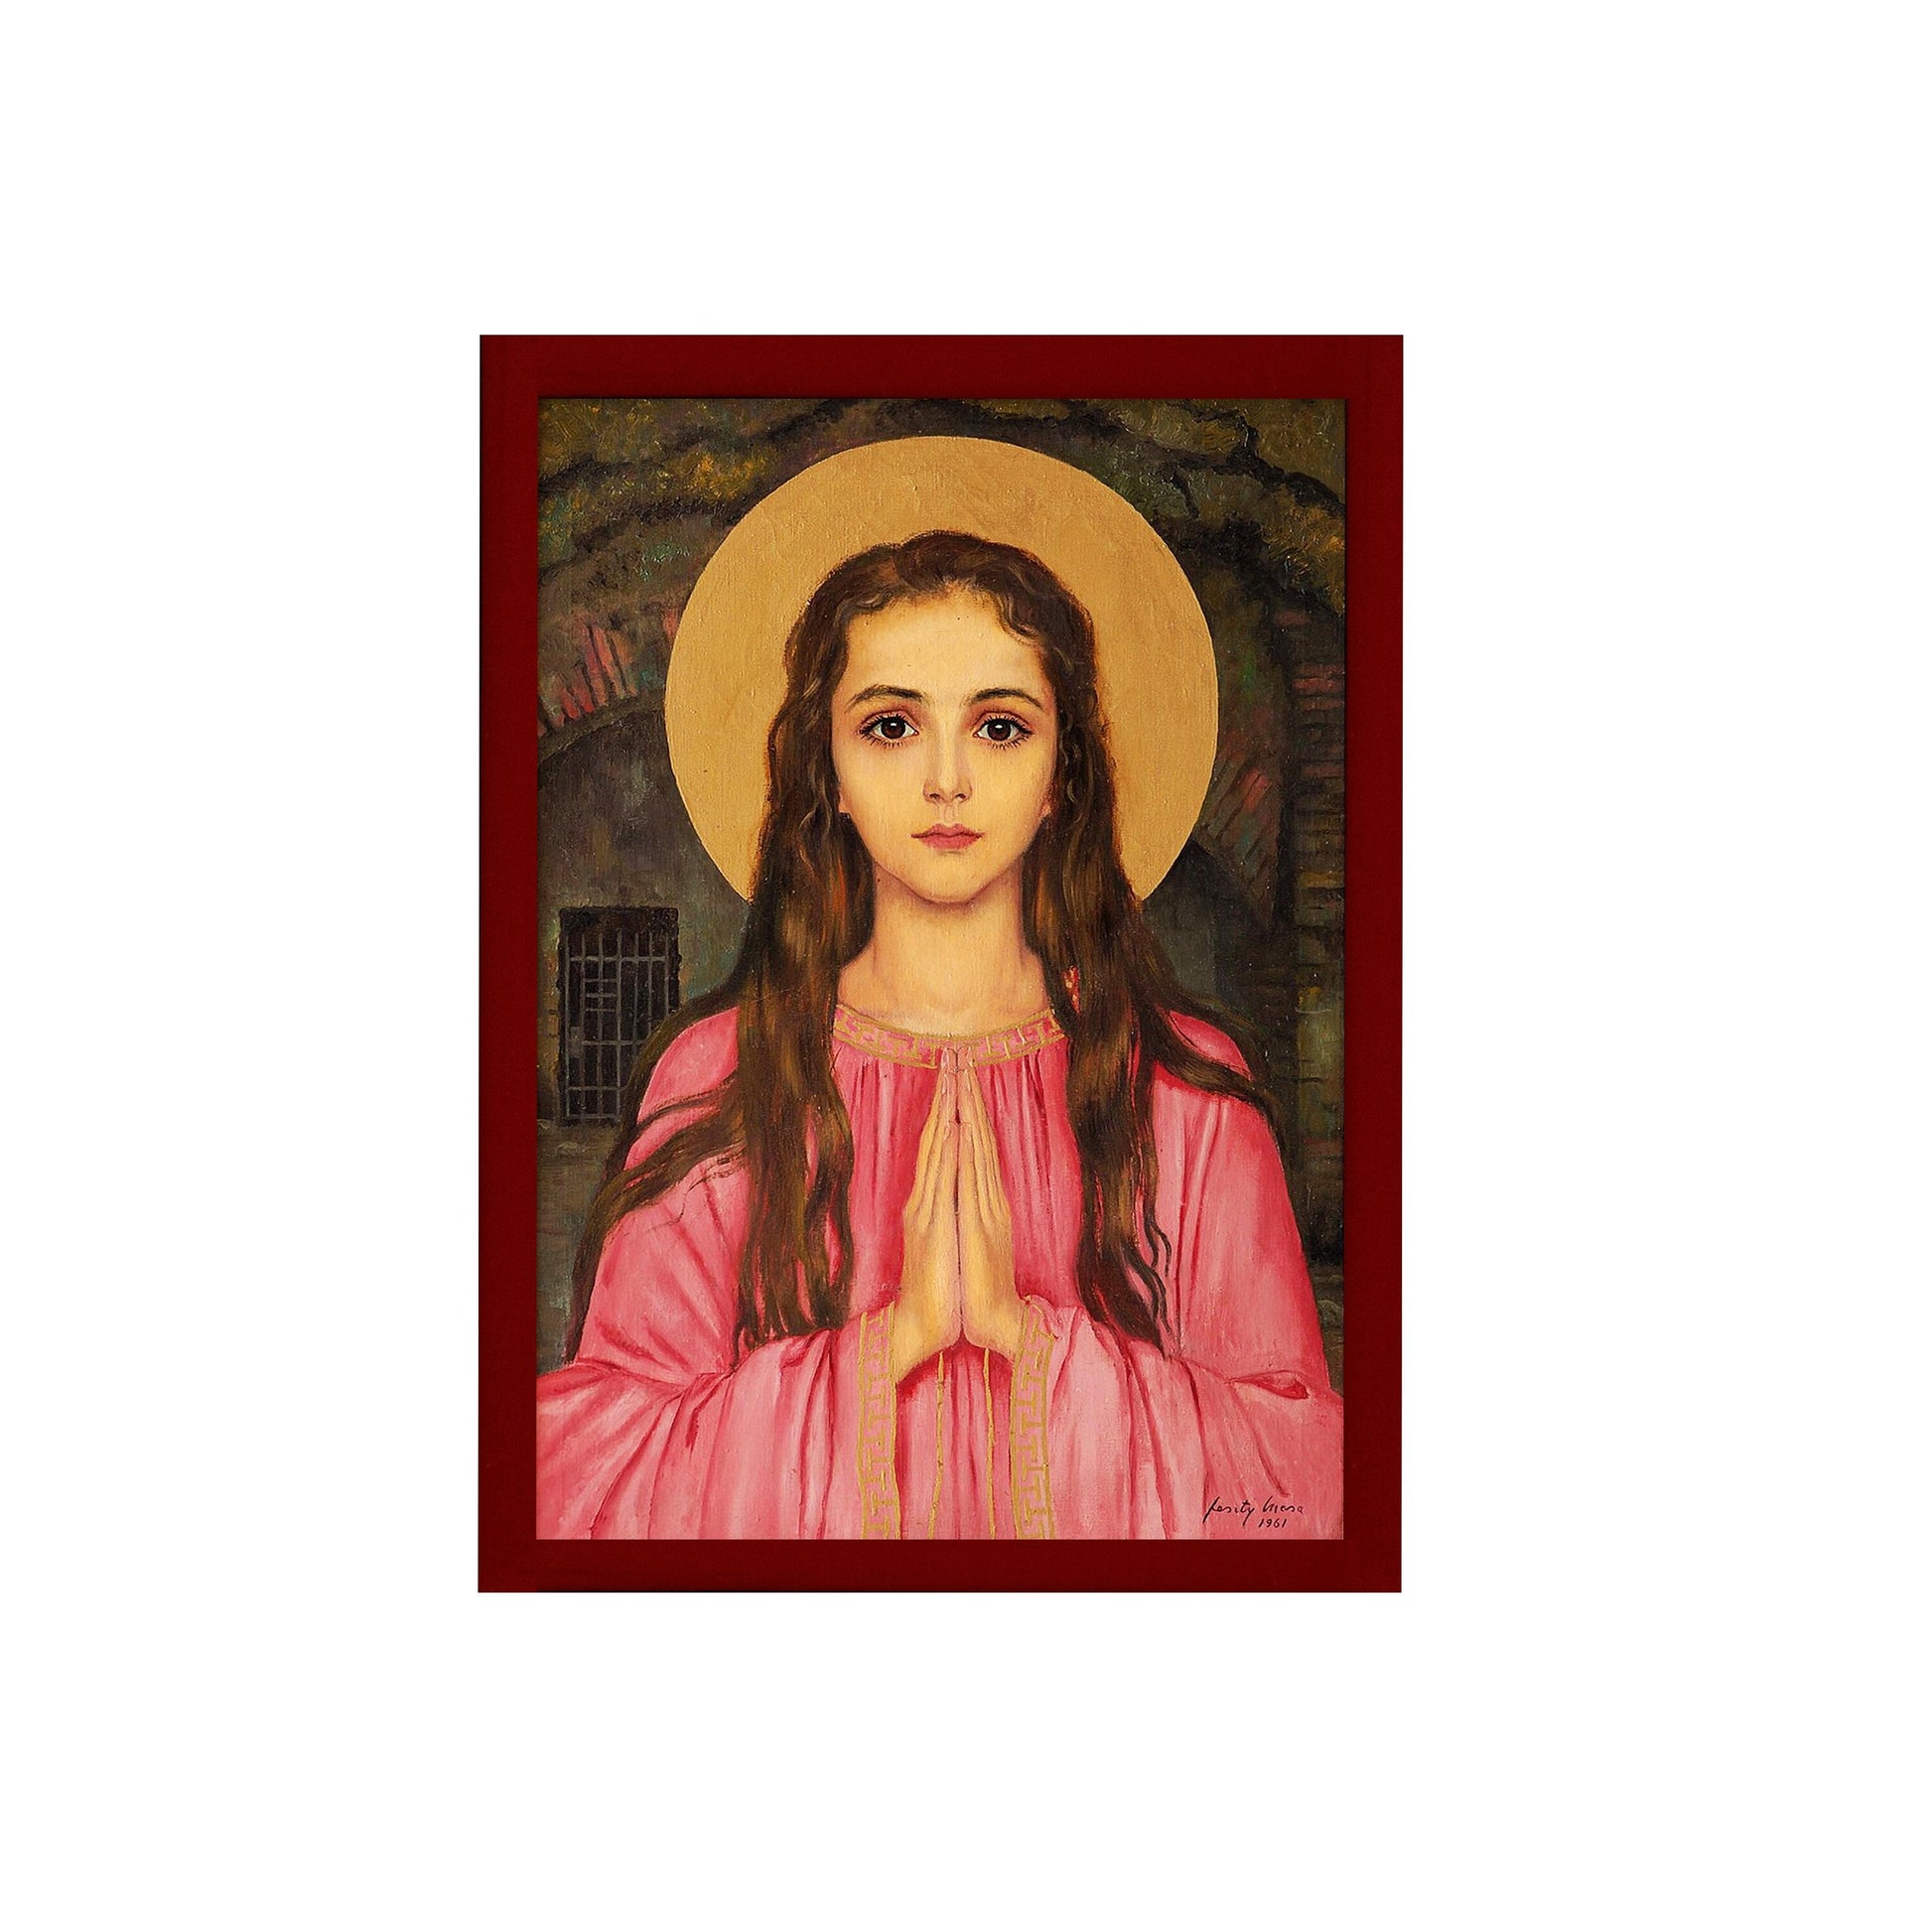 Saint Philomena icon, Handmade Greek Catholic Orthodox icon of St Philomena of Corfu, Byzantine art wall hanging, religious gift TheHolyArt